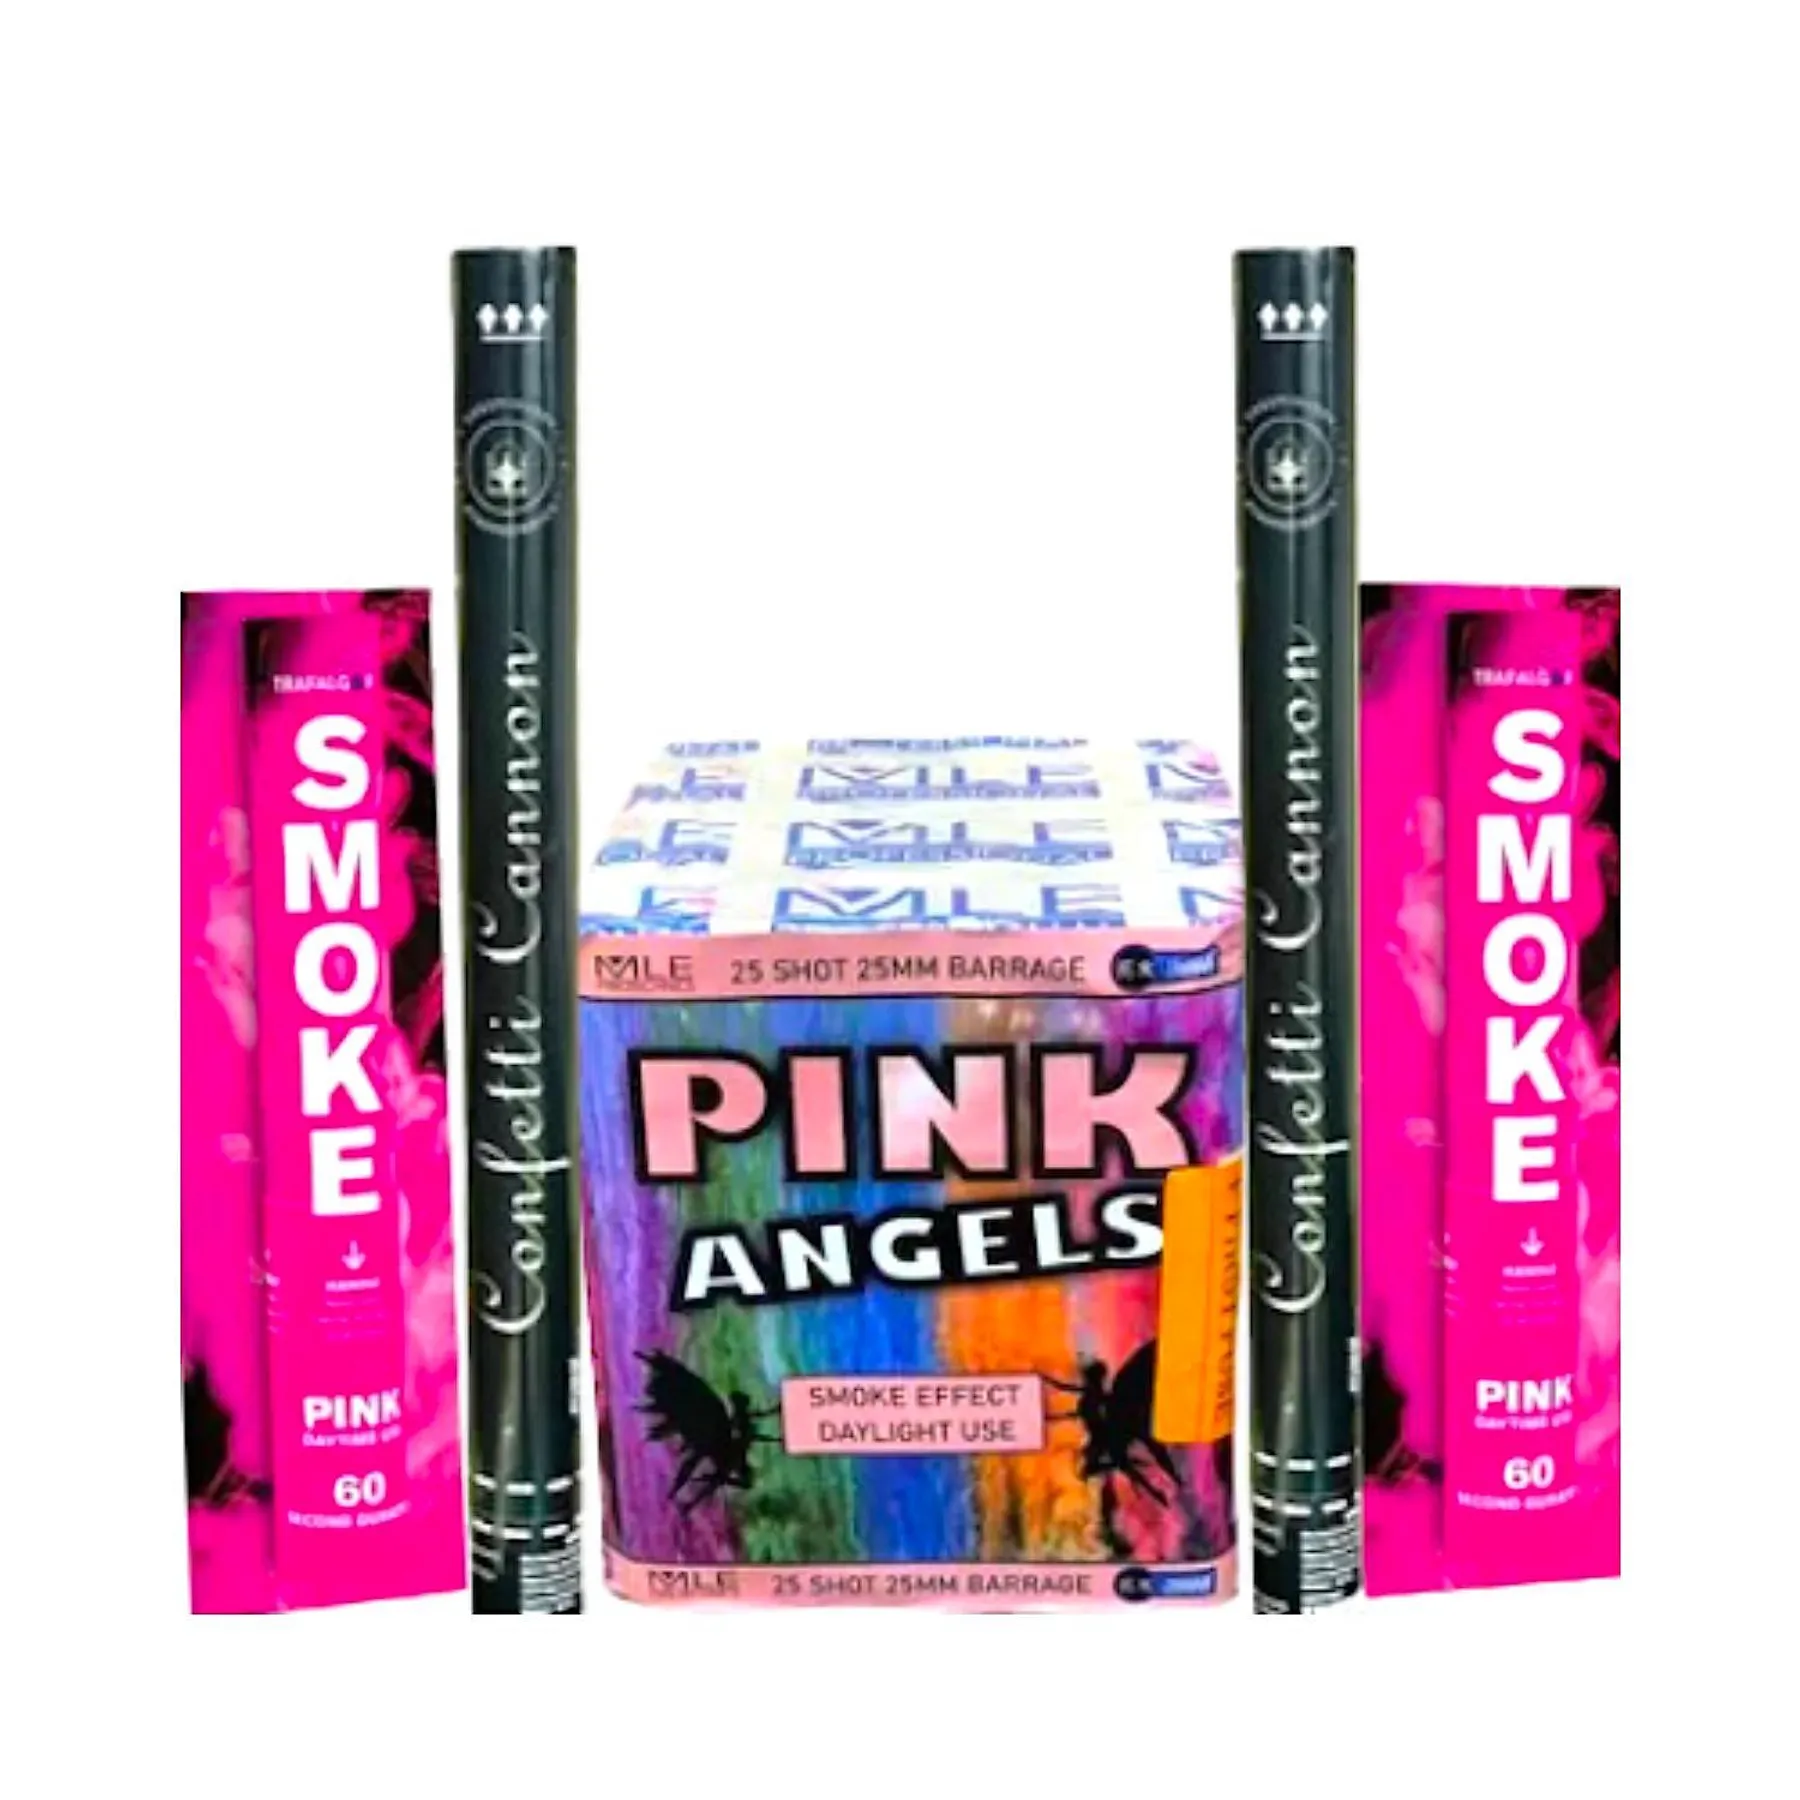 Pink Angels confetti pink smoke gender reveal Manchester Fireworks